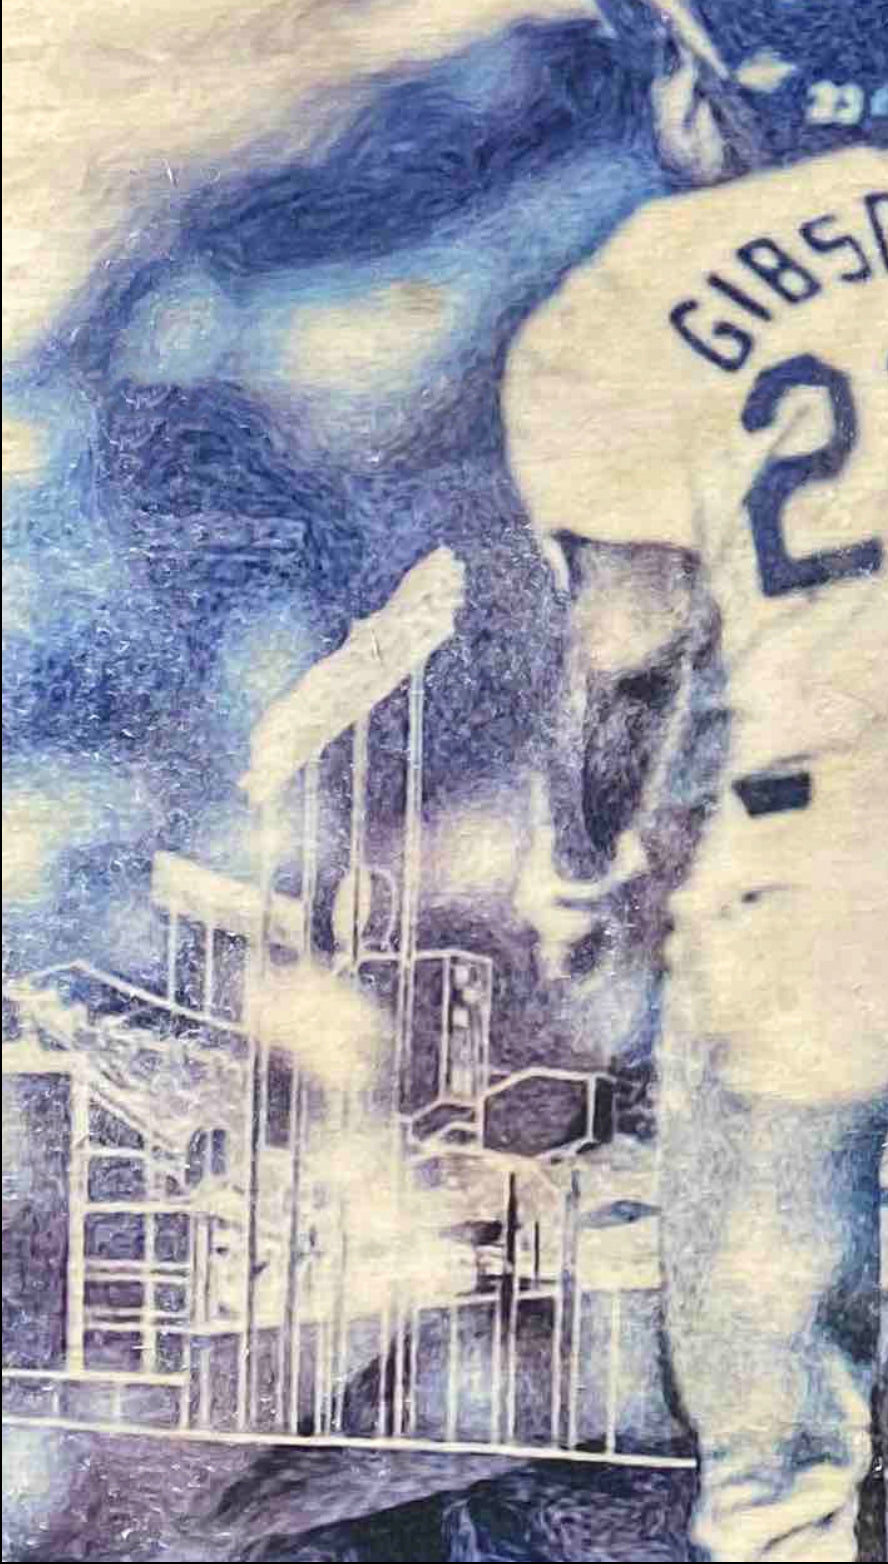 "Gibby” (Kirk Gibson) Los Angeles Dodgers - 1/1 Original on birchwood